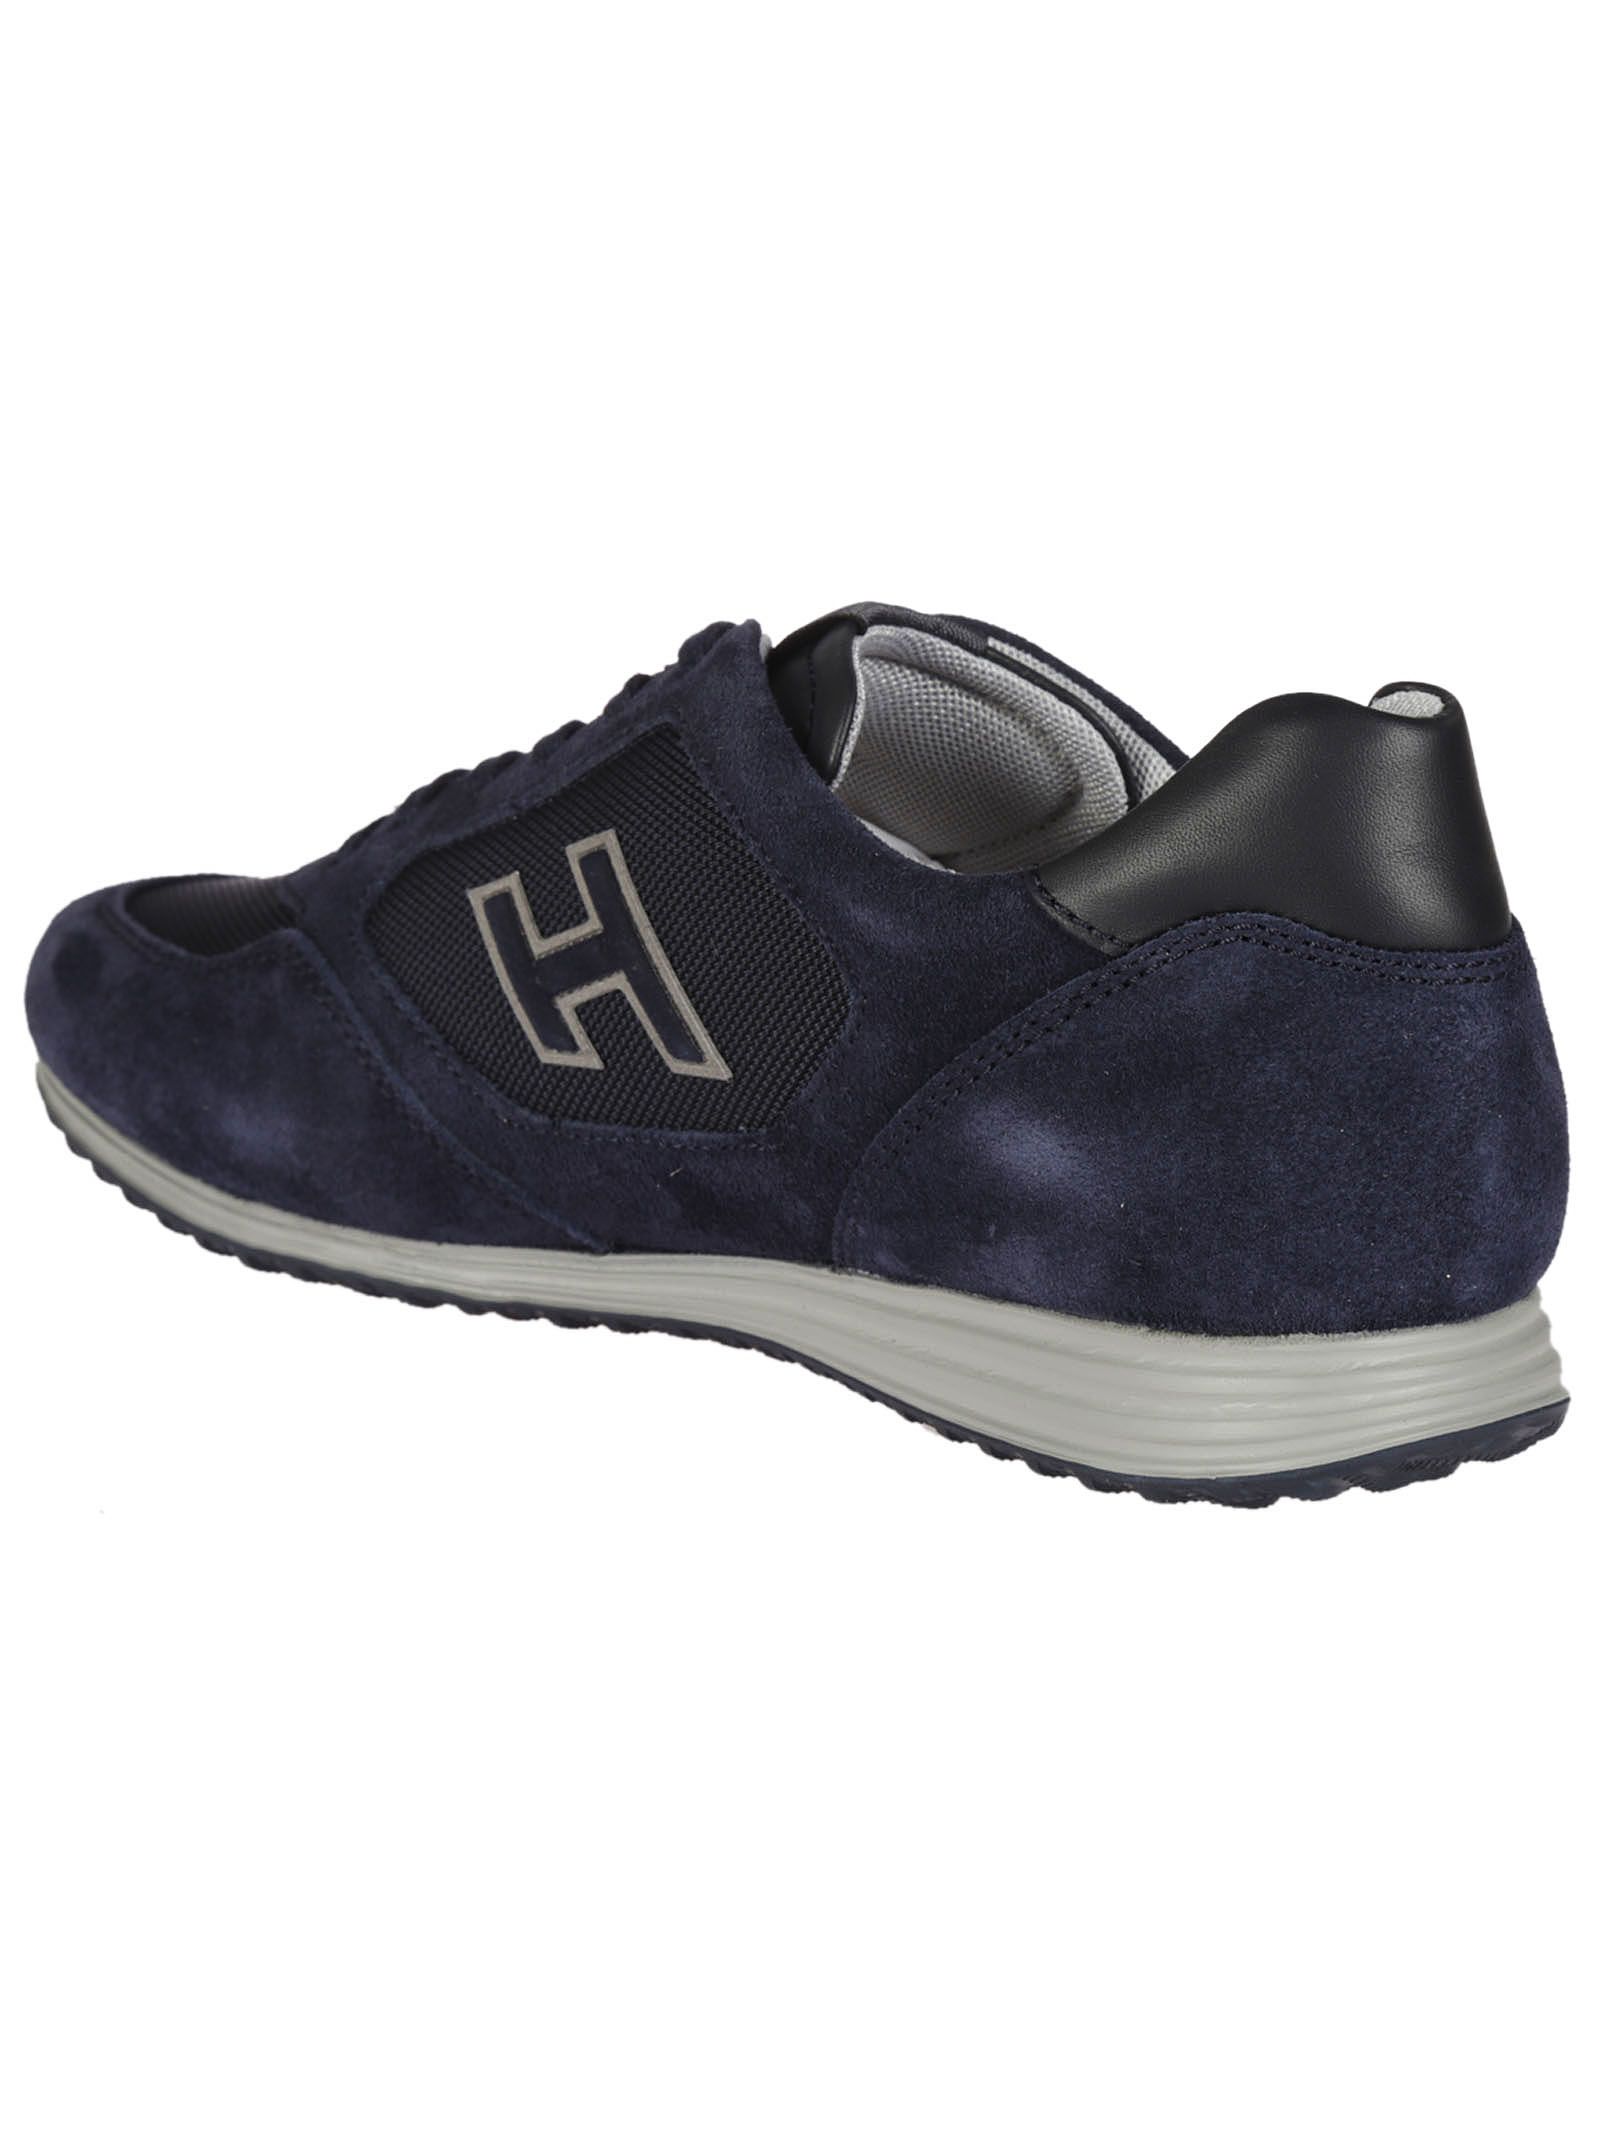 Hogan - Hogan Olympia X H205 Sneakers - Blue/Black, Men's Sneakers ...